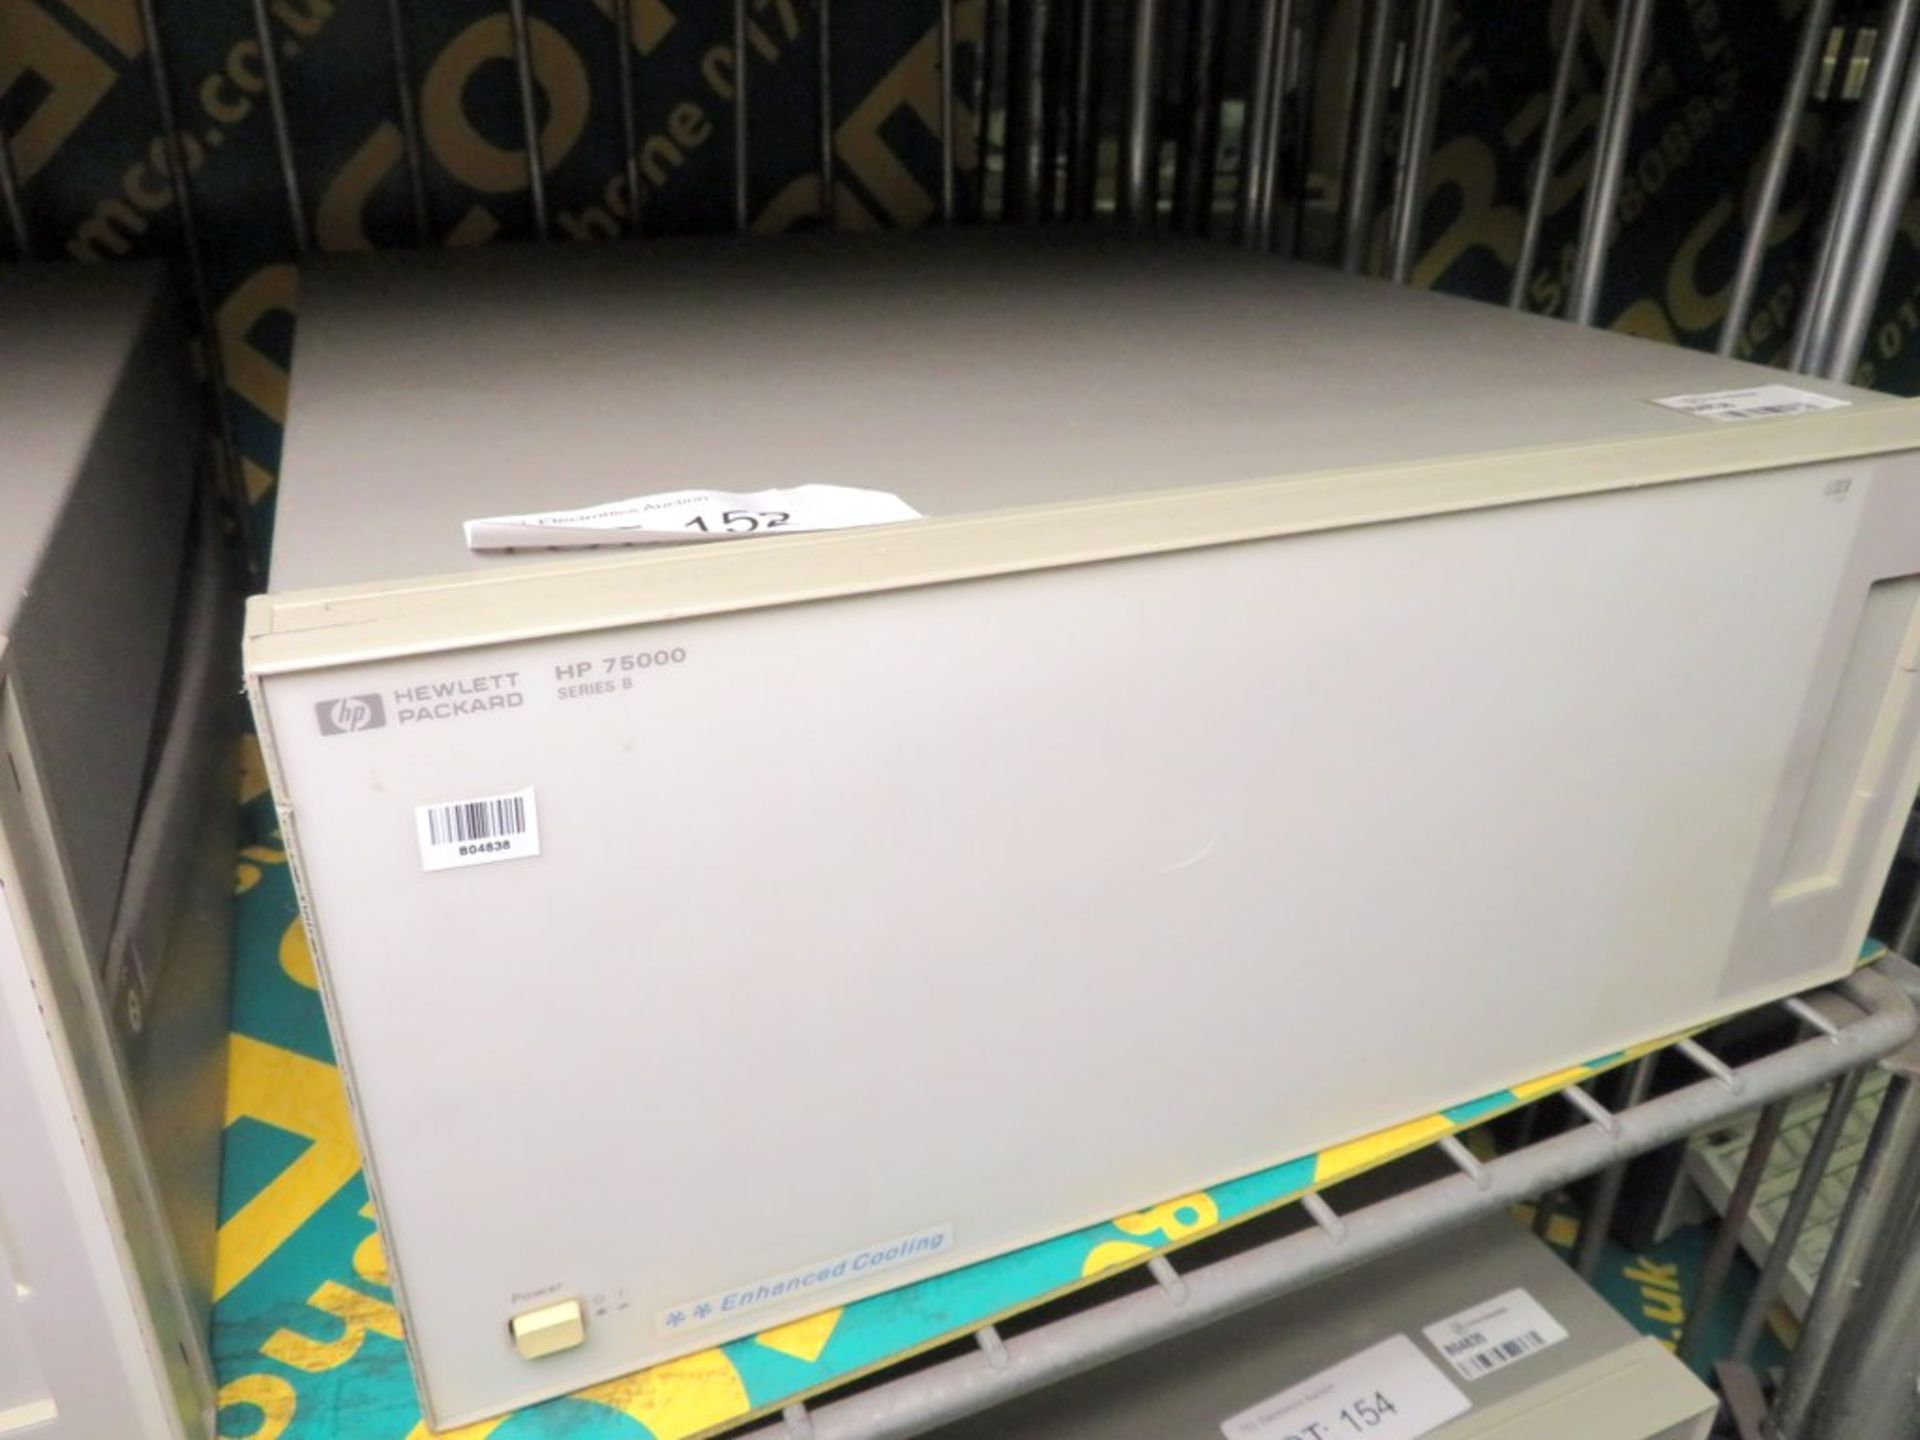 HP 765000 Series B Panel - Image 2 of 8